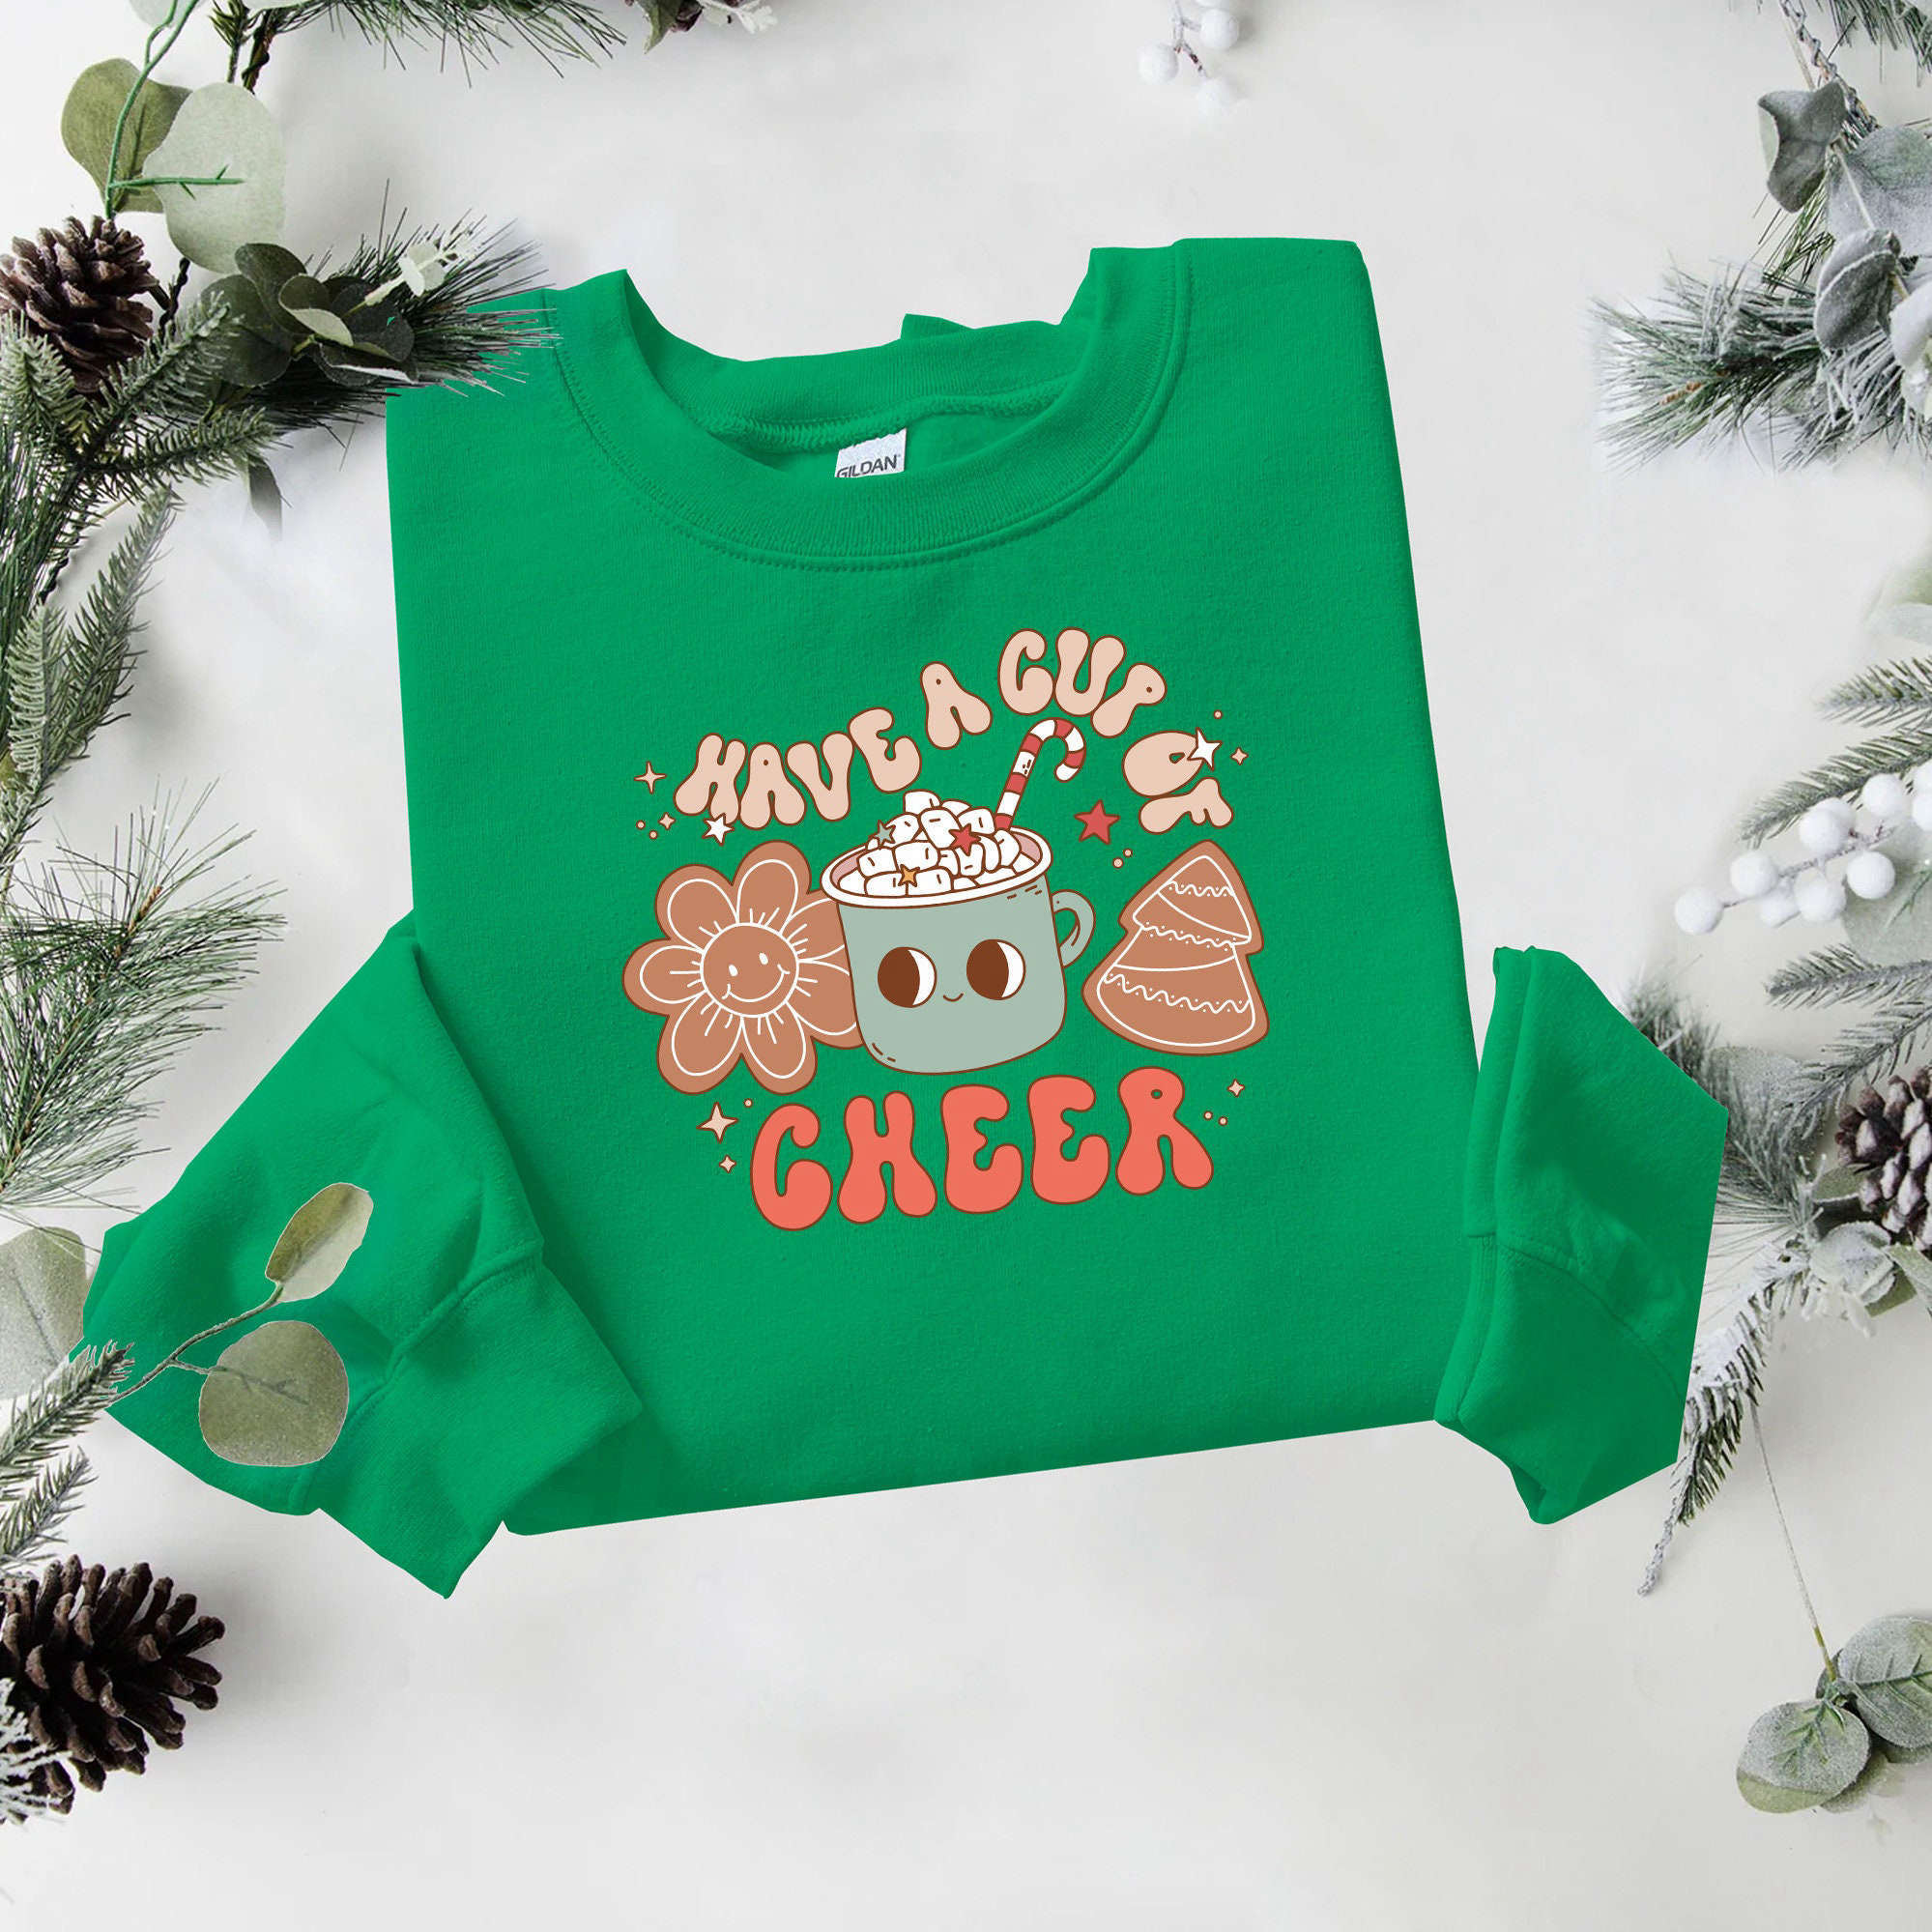 Cup Of Cheer Christmas Shirt, Christmas Sweatshirt, Womens Christmas Shirt, Christmas Gift, Christmas Sweater, Holiday Retro Sw eatshirt